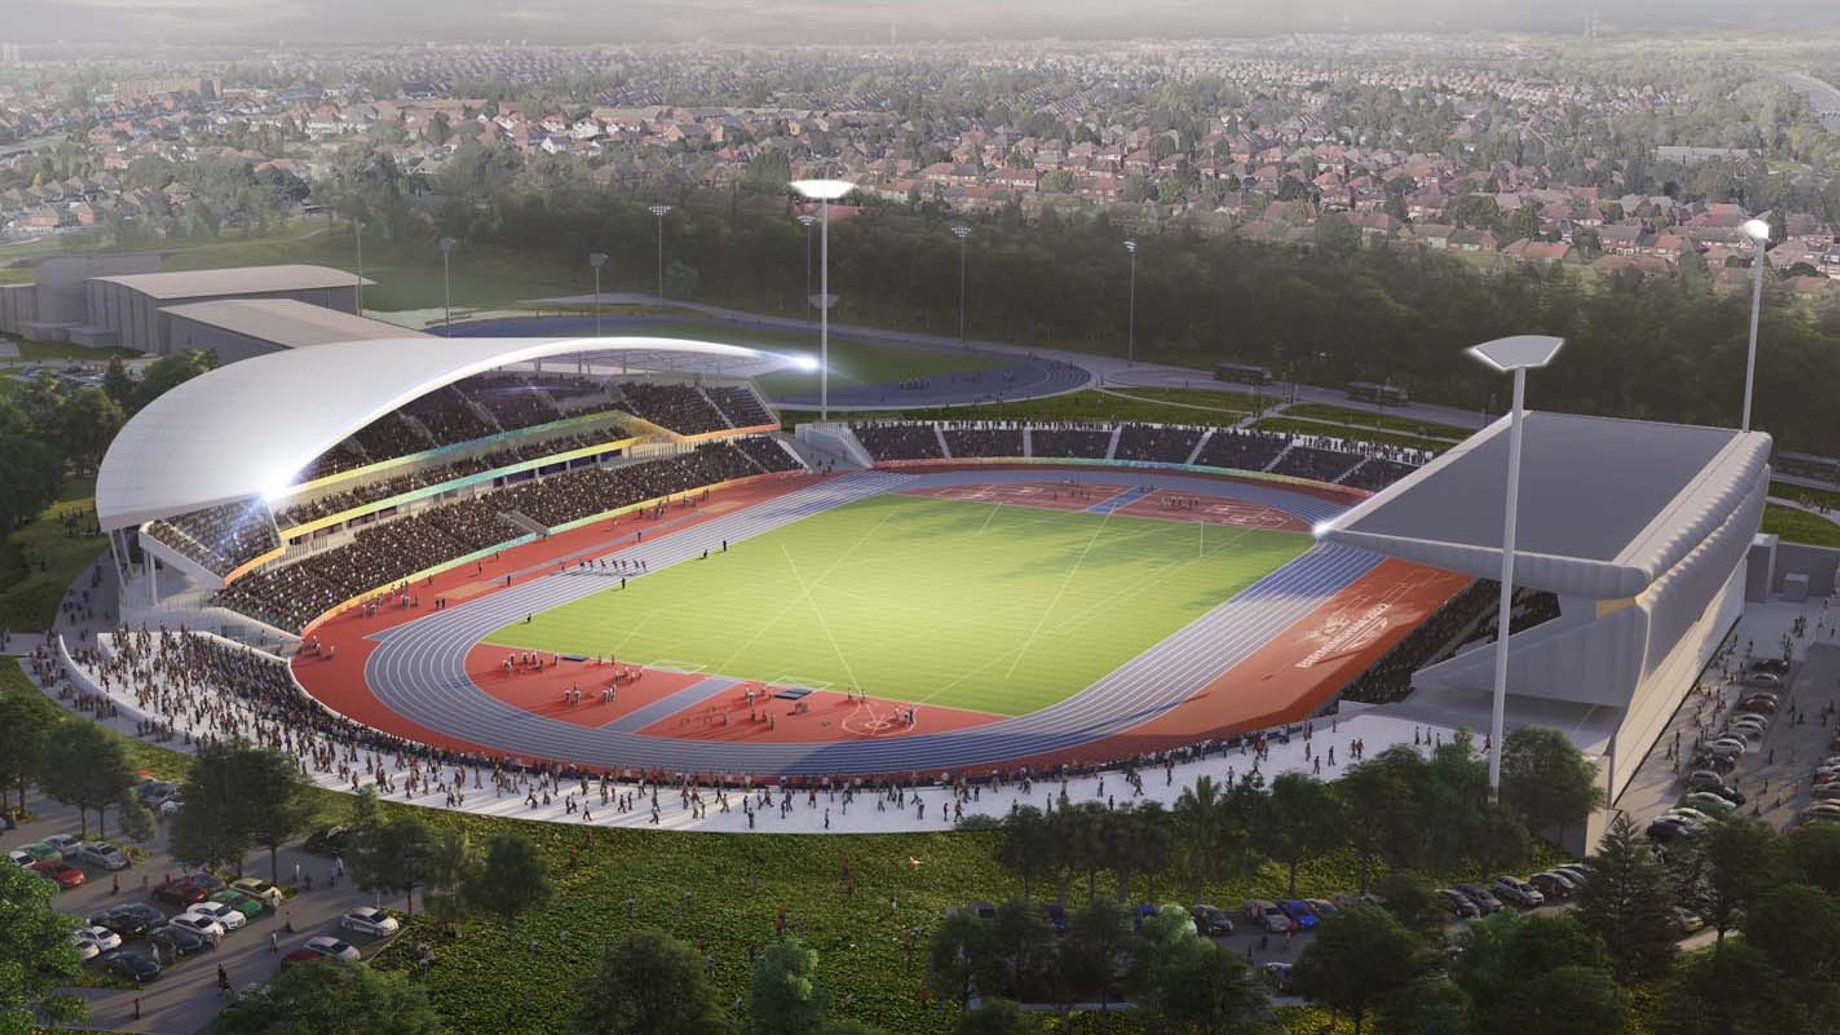 CGI impression of Alexander Stadium